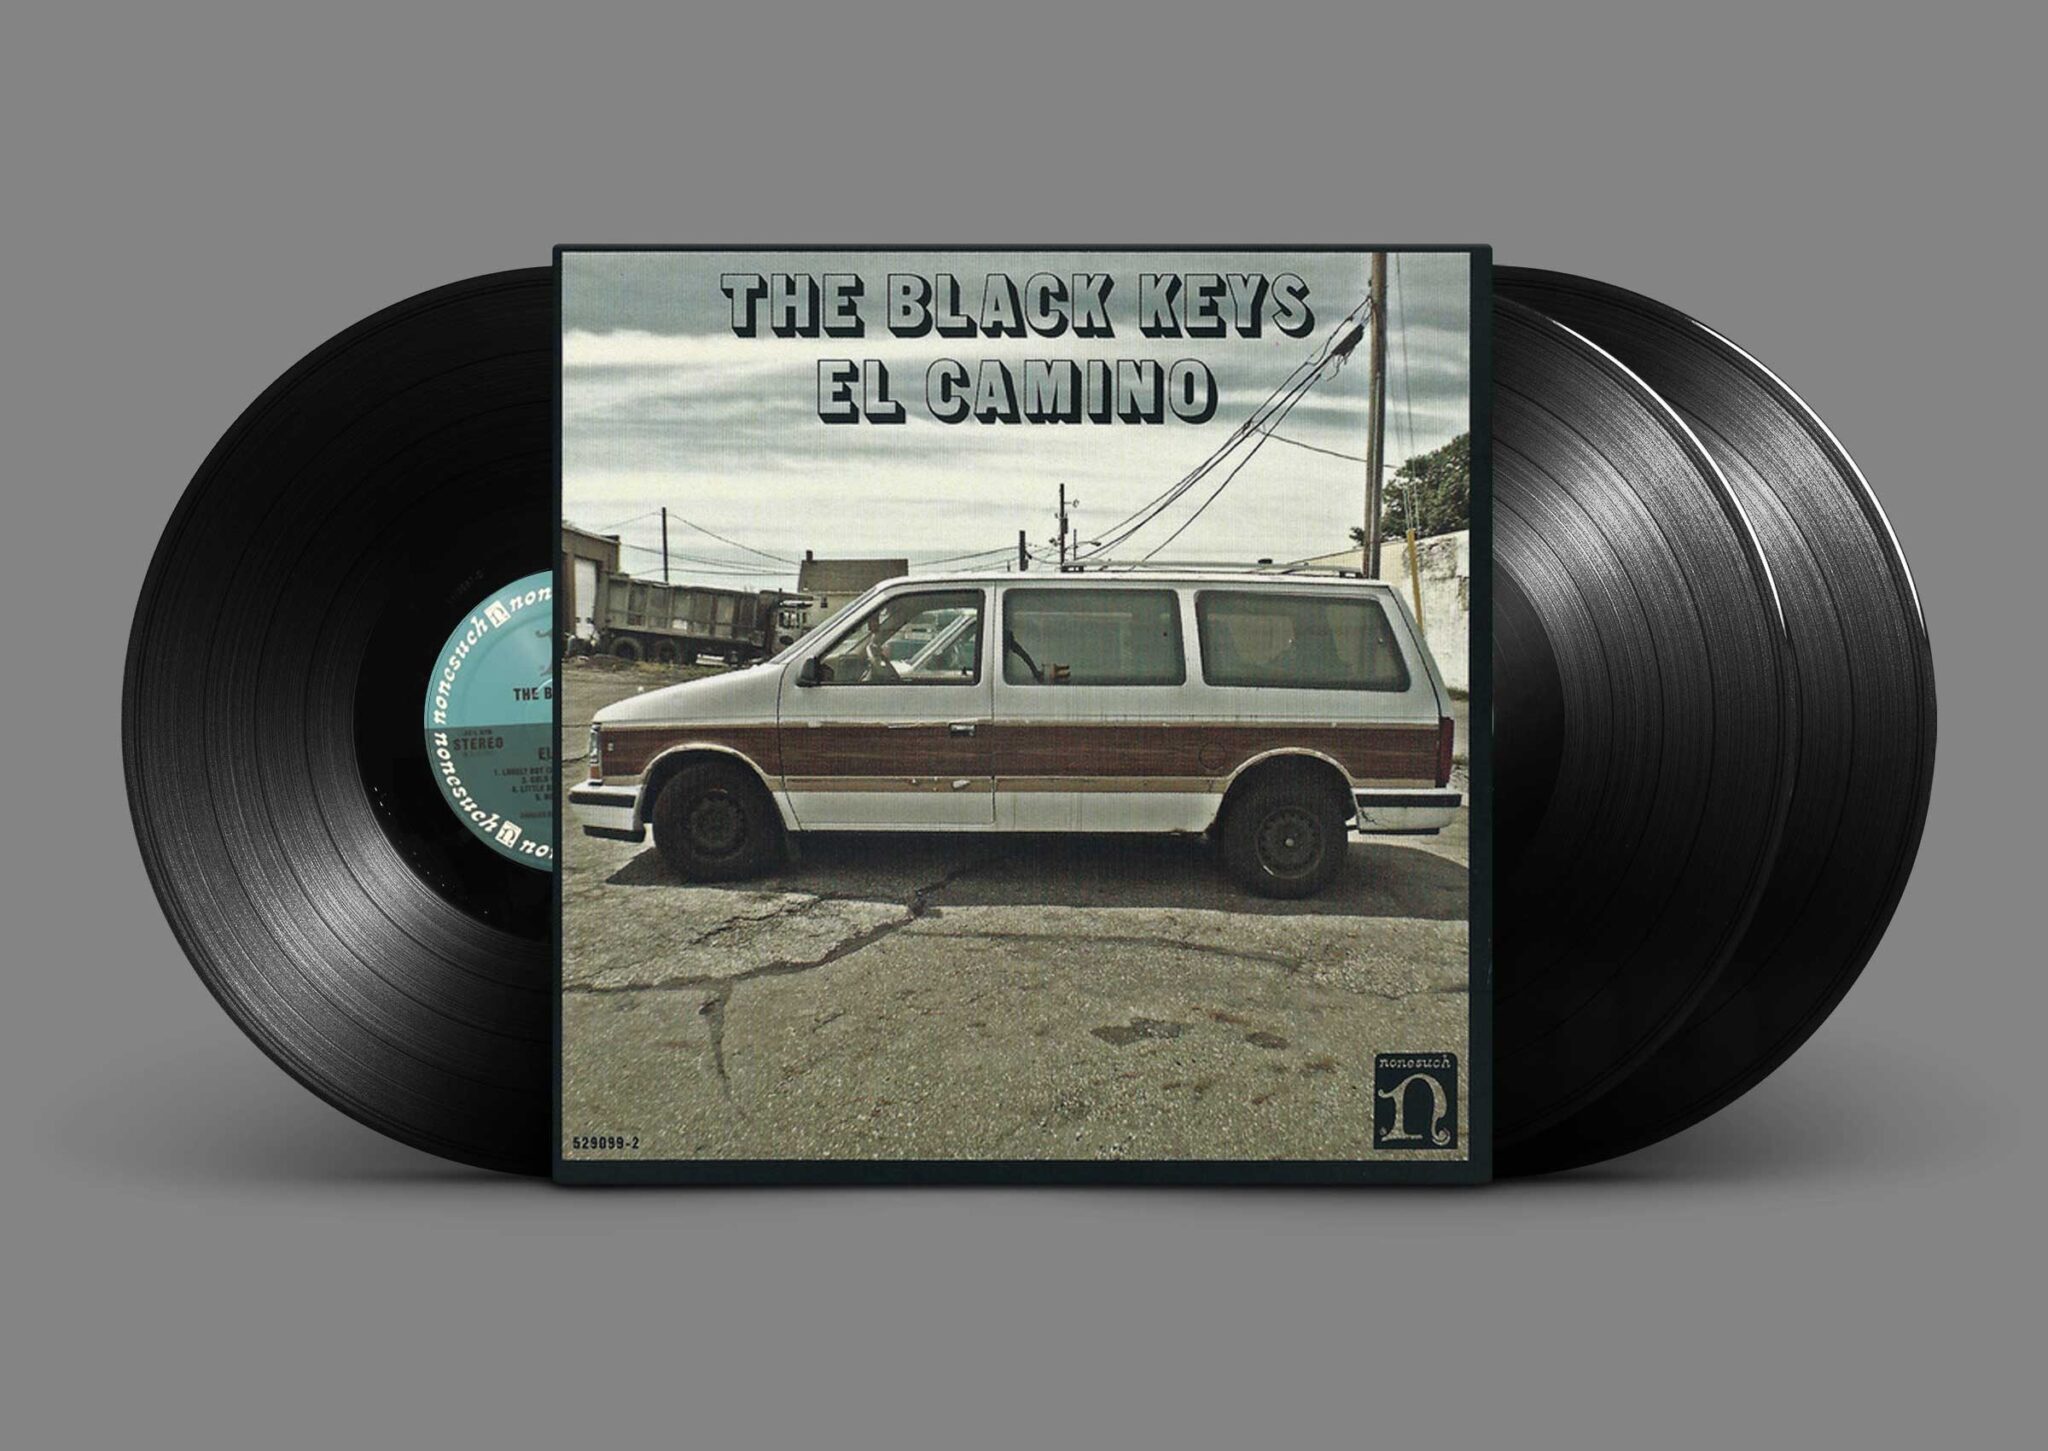 The Black Keys' 'El Camino' (10th Anniversary Deluxe, 51% OFF